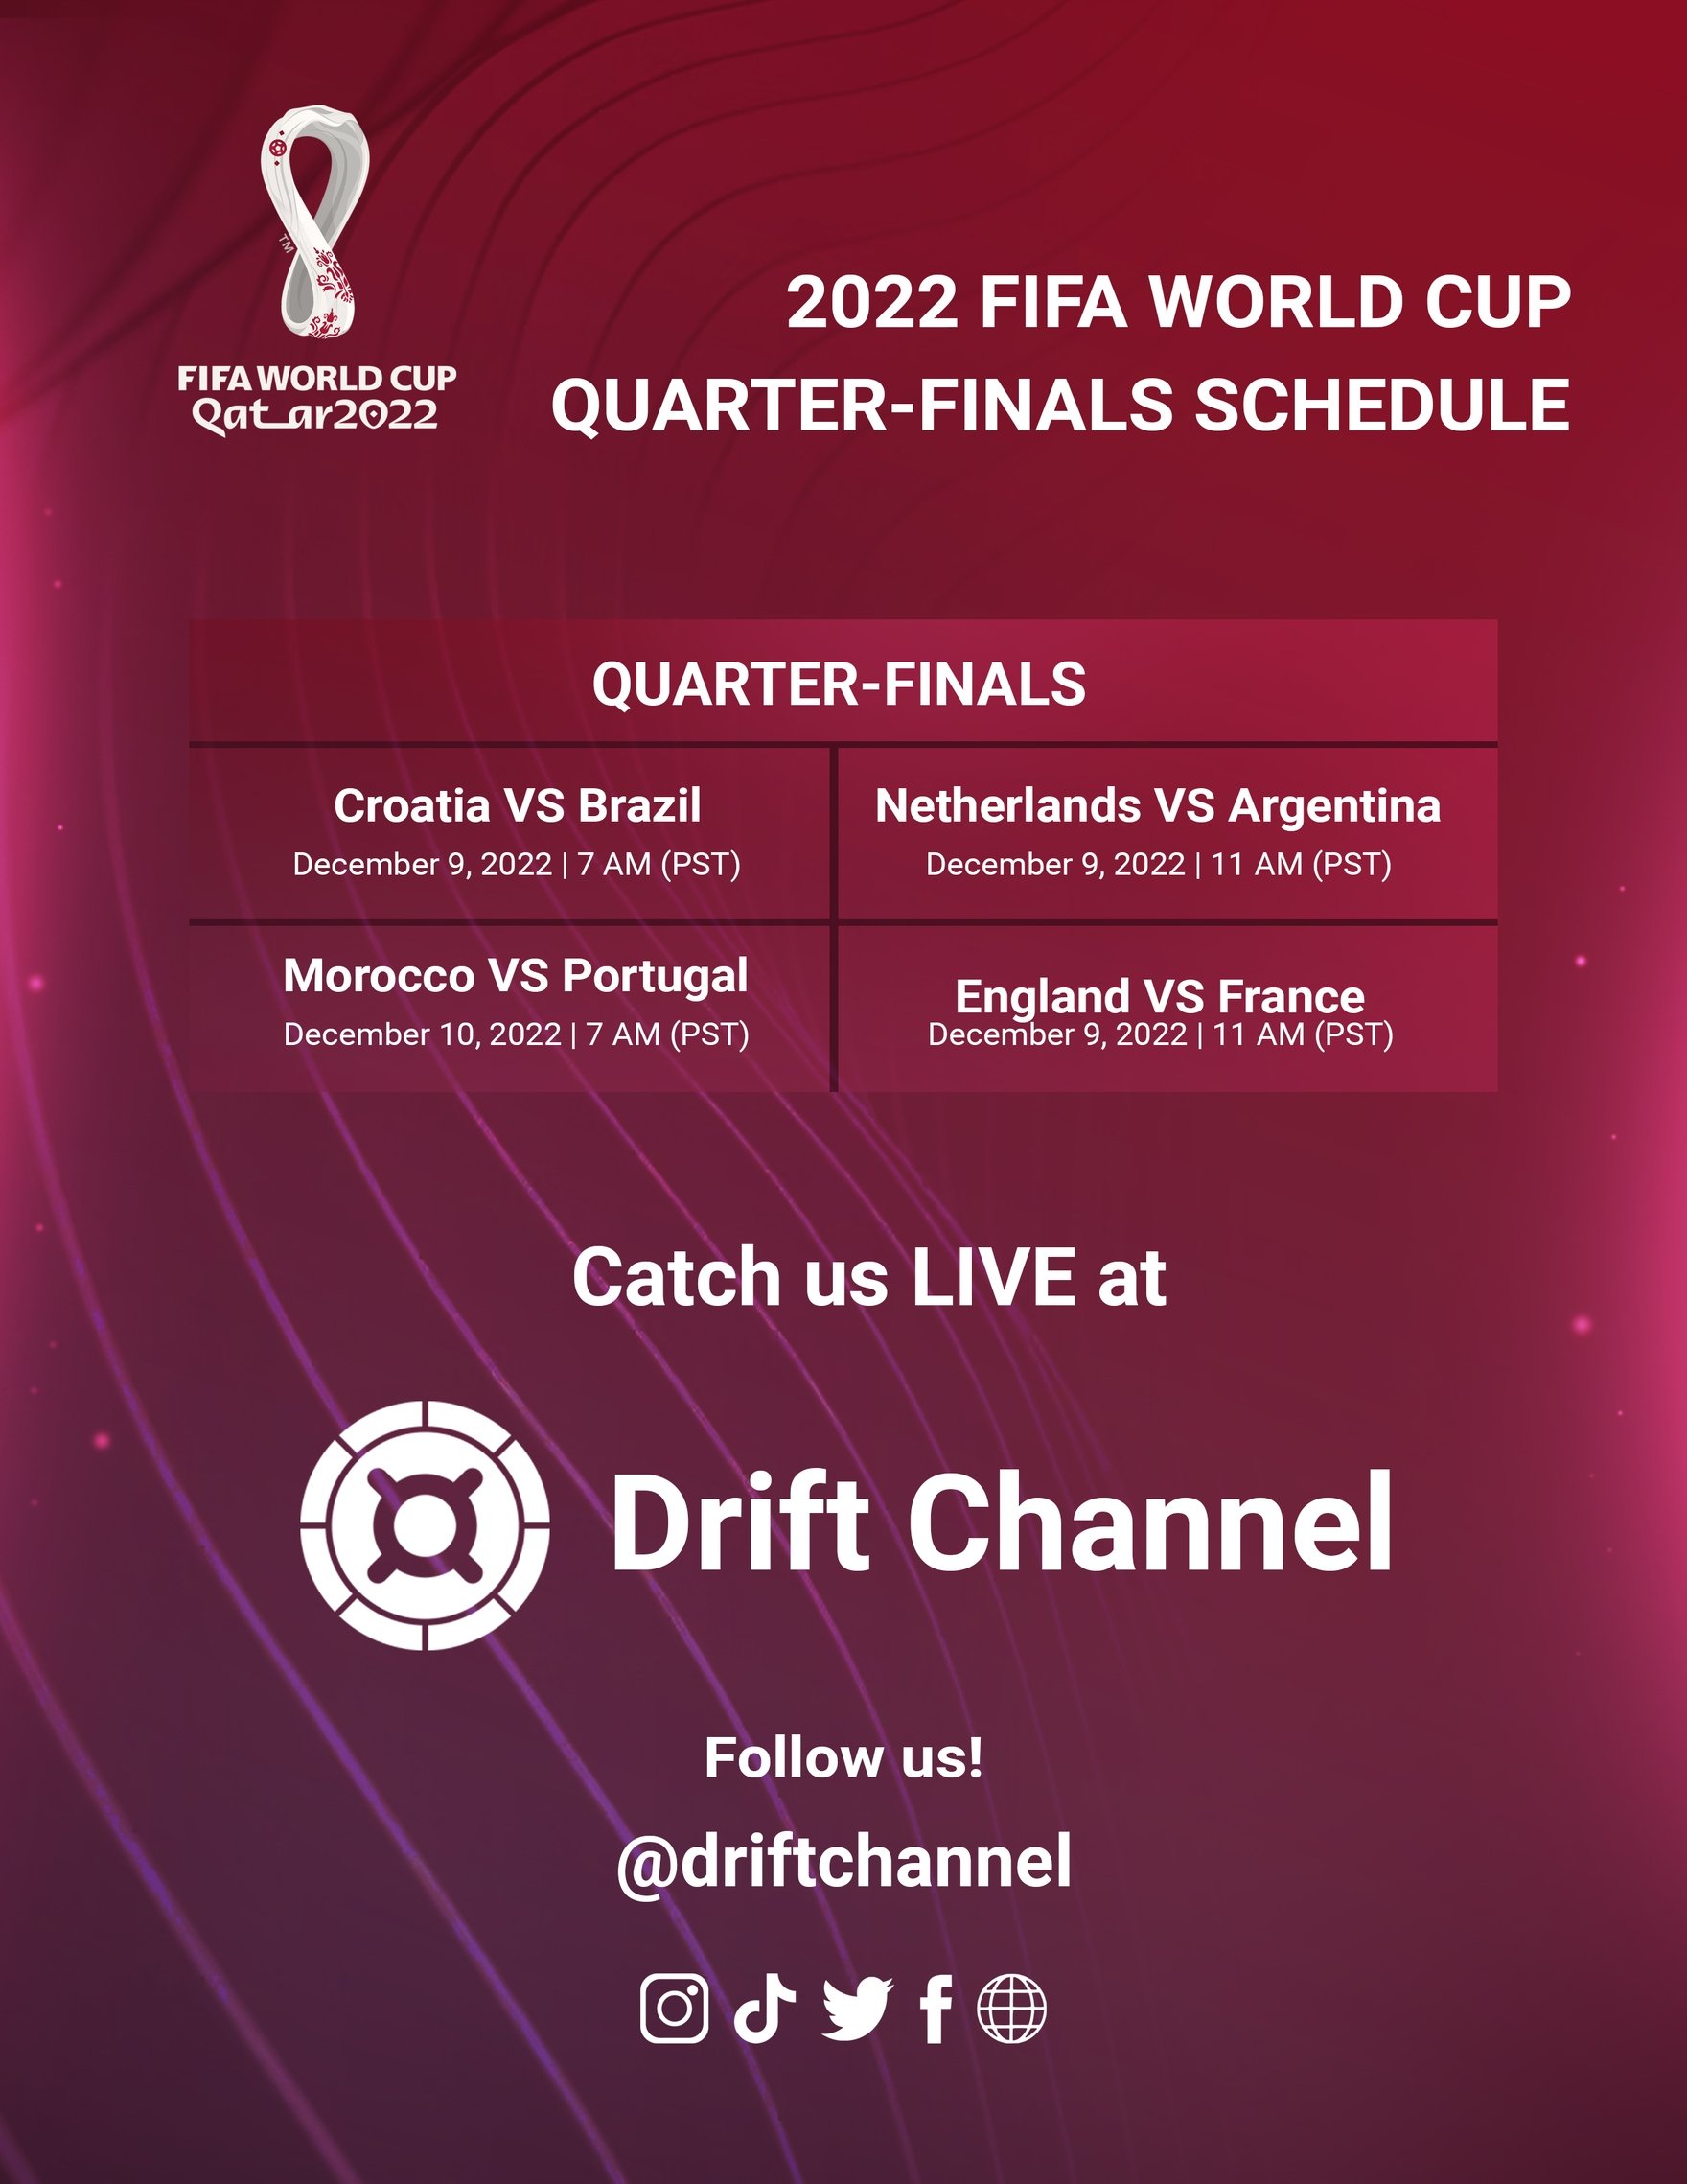 FIFA World Cup 2022 Quarter-Finals Schedule Flyer